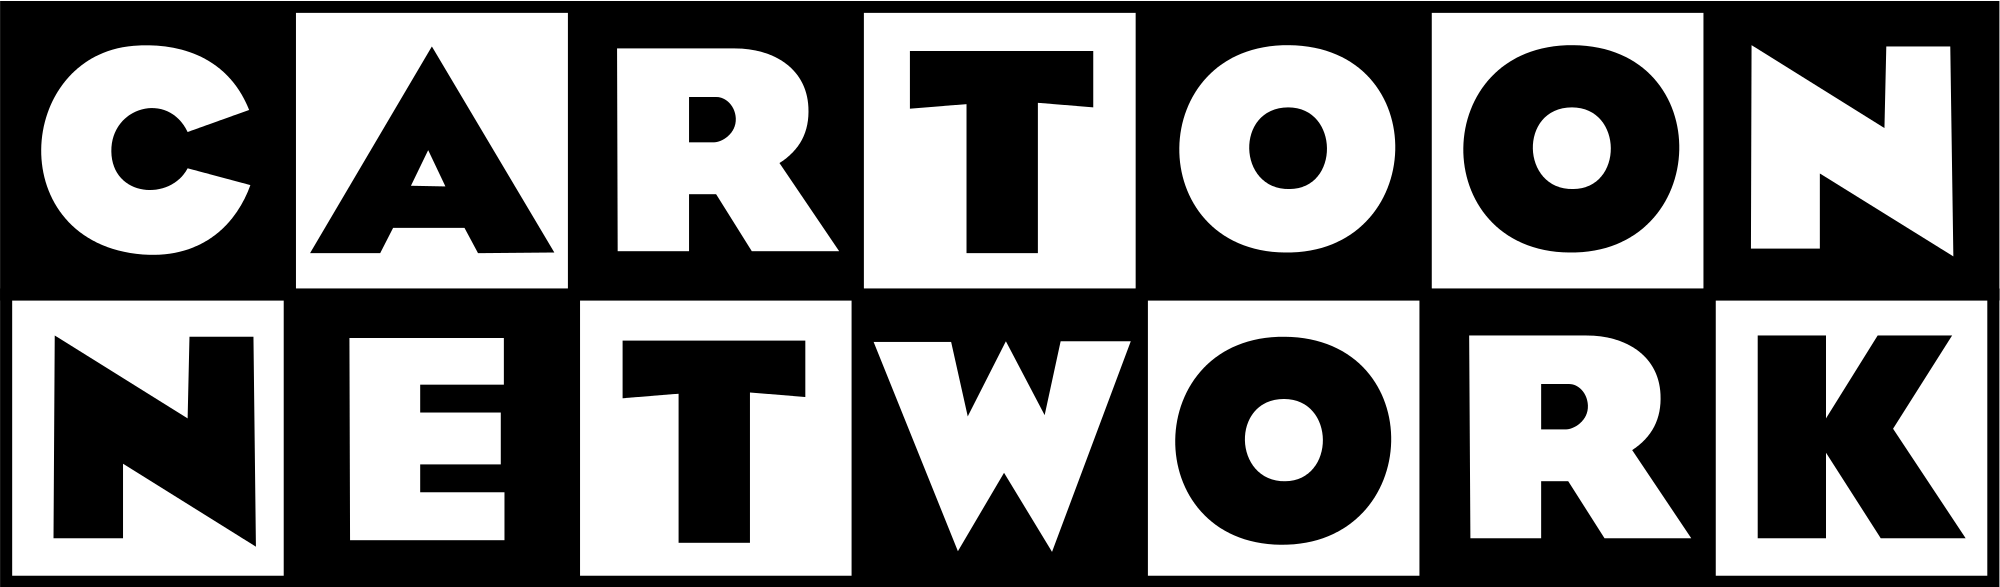 Cartoon Network 2017 Logo - Original Cartoon Network logo.png